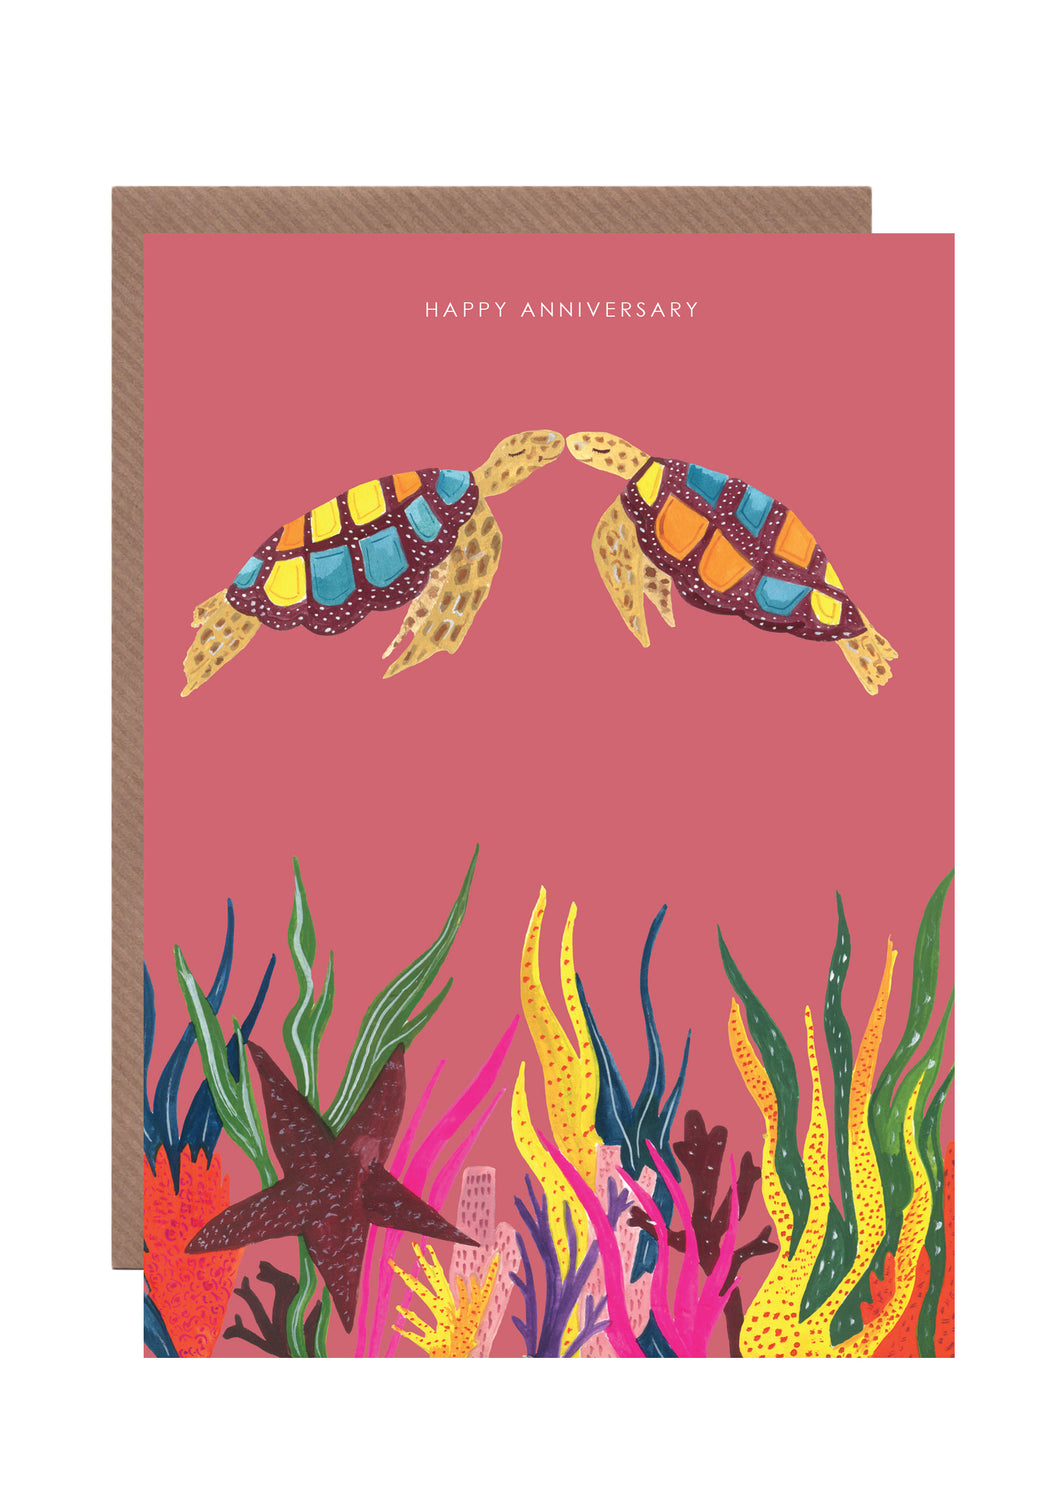 Turtles Coral Reef anniversary card